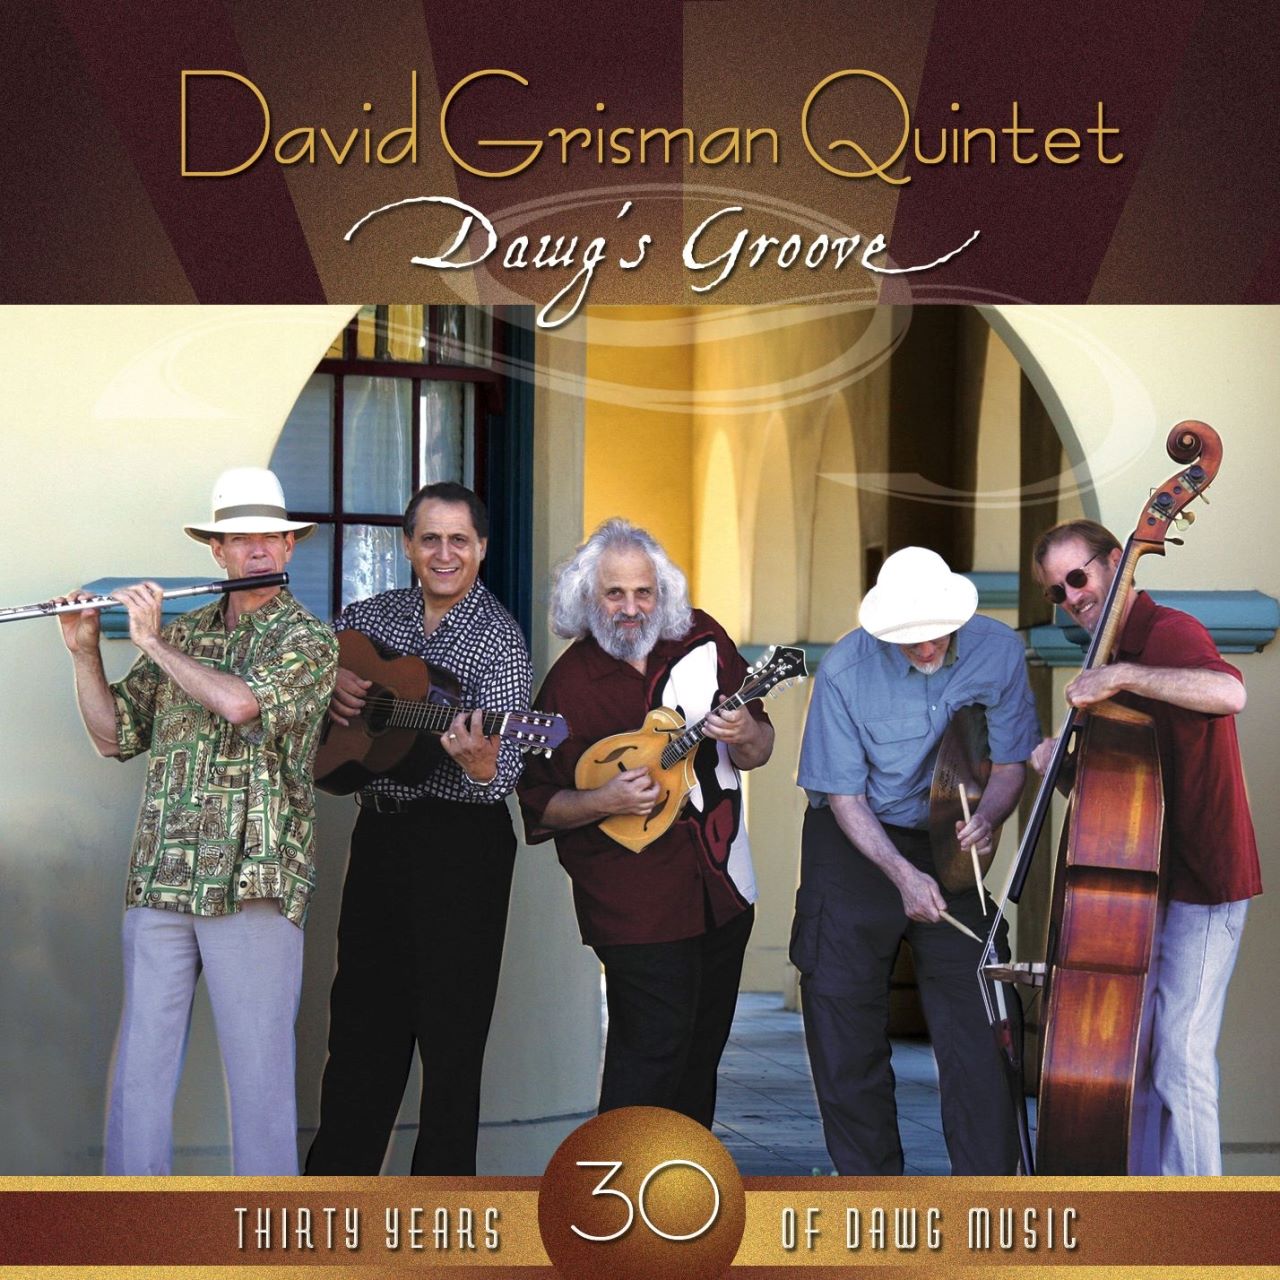 David Grisman Quintet - Dawg's Groove cover album